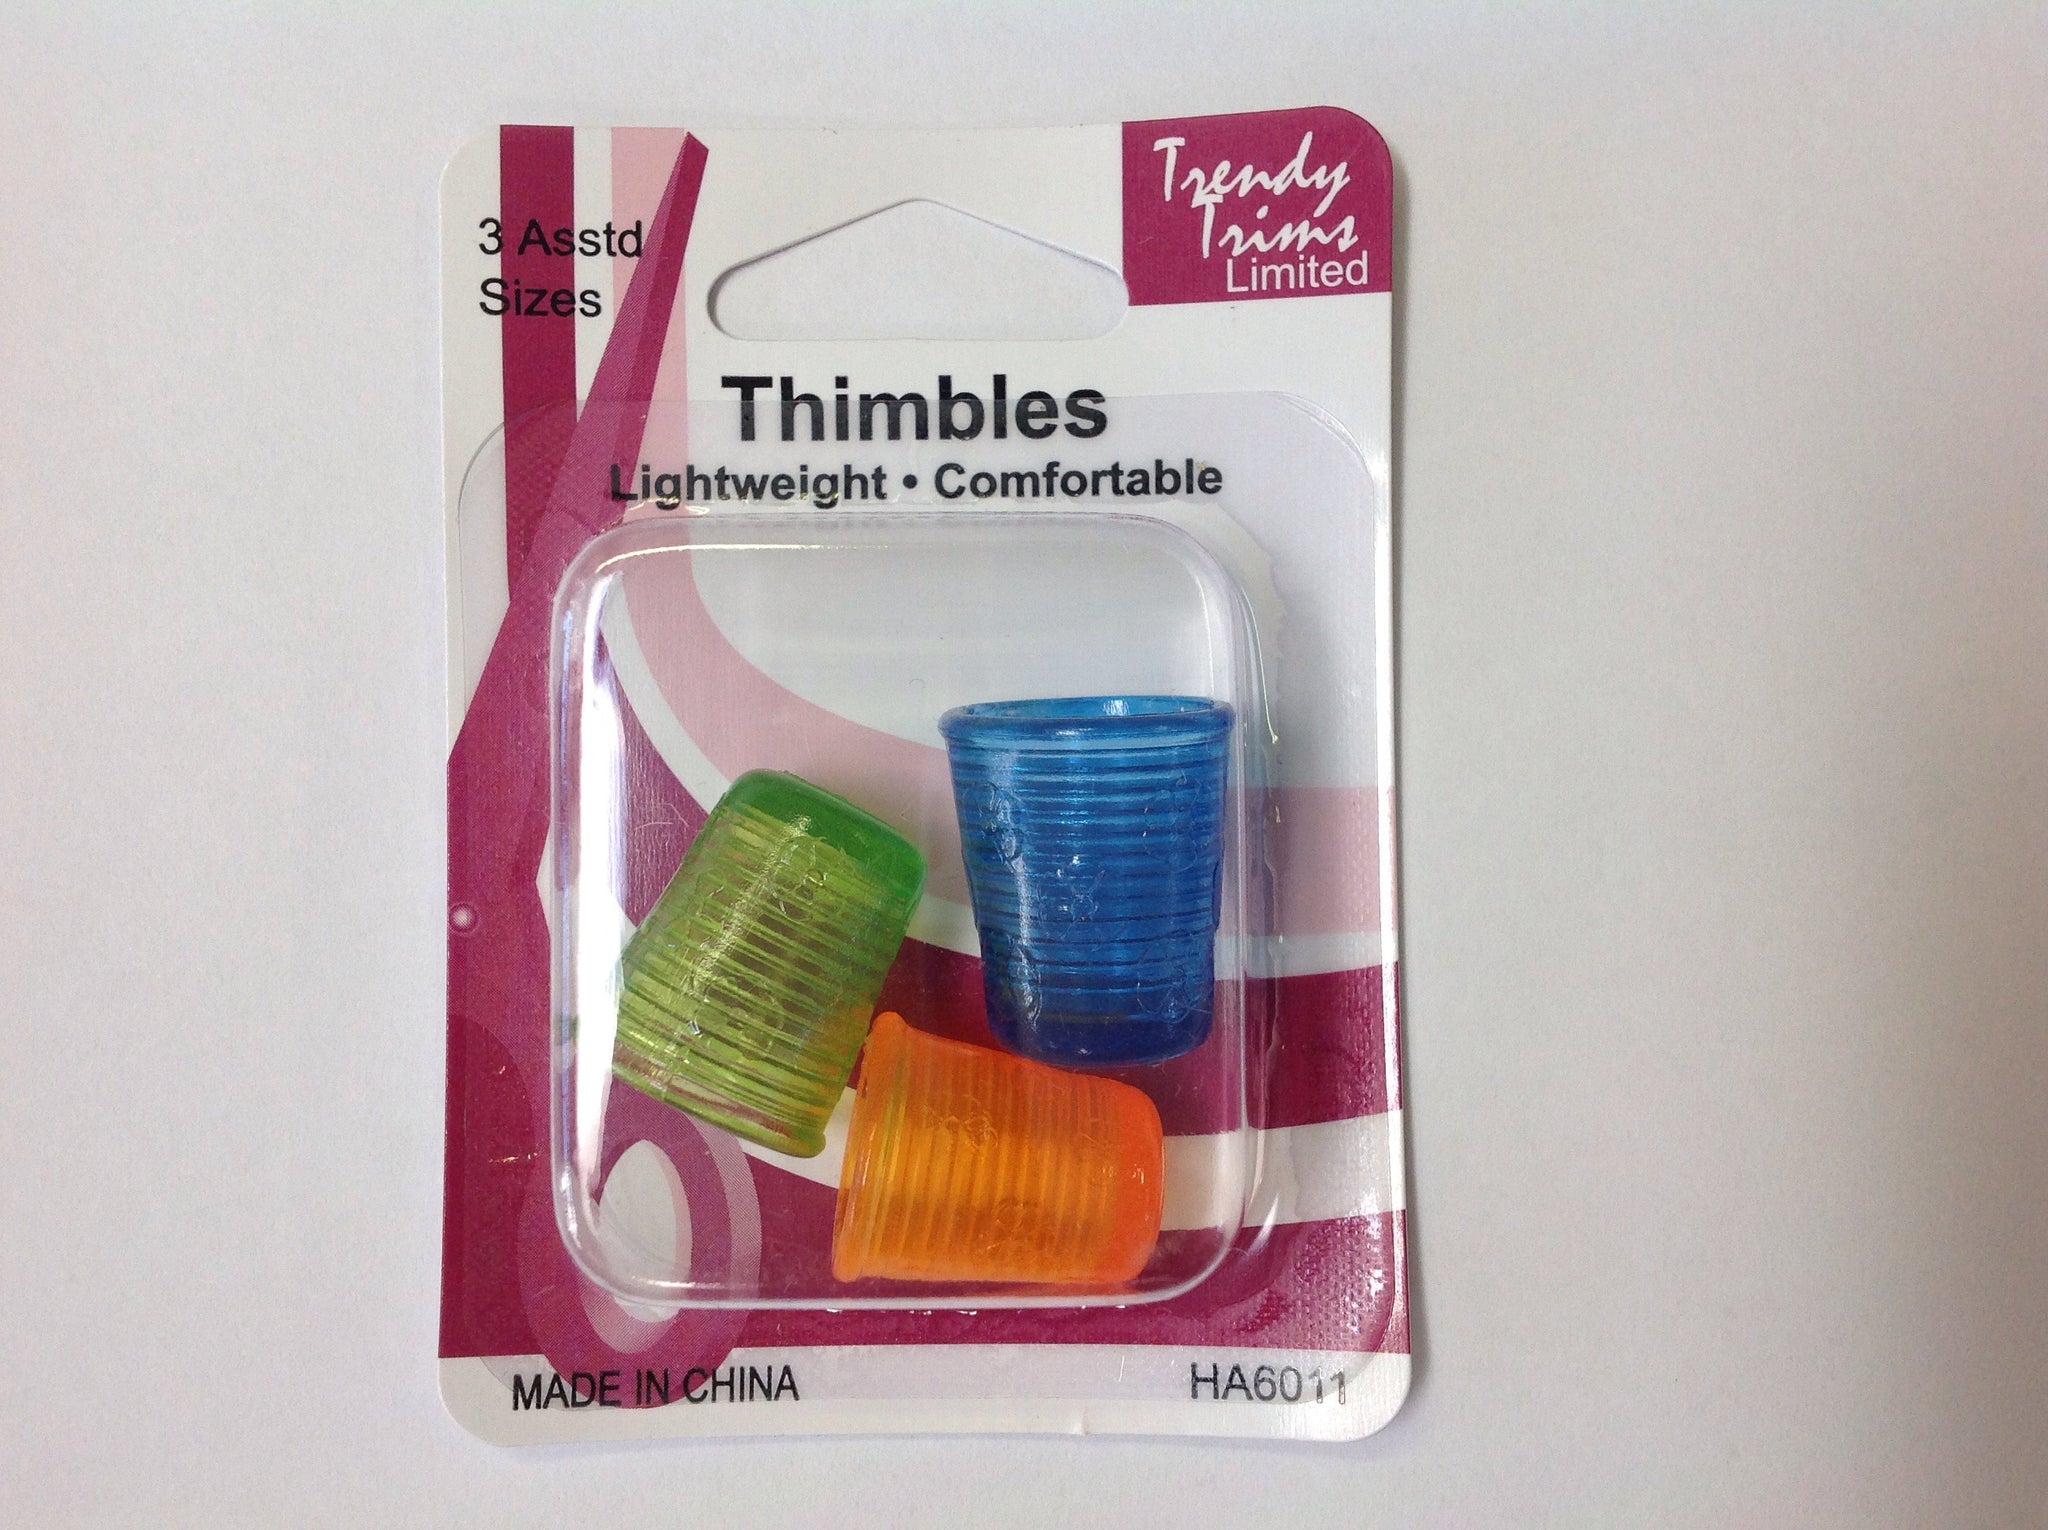 Thimbles - Trendy trims